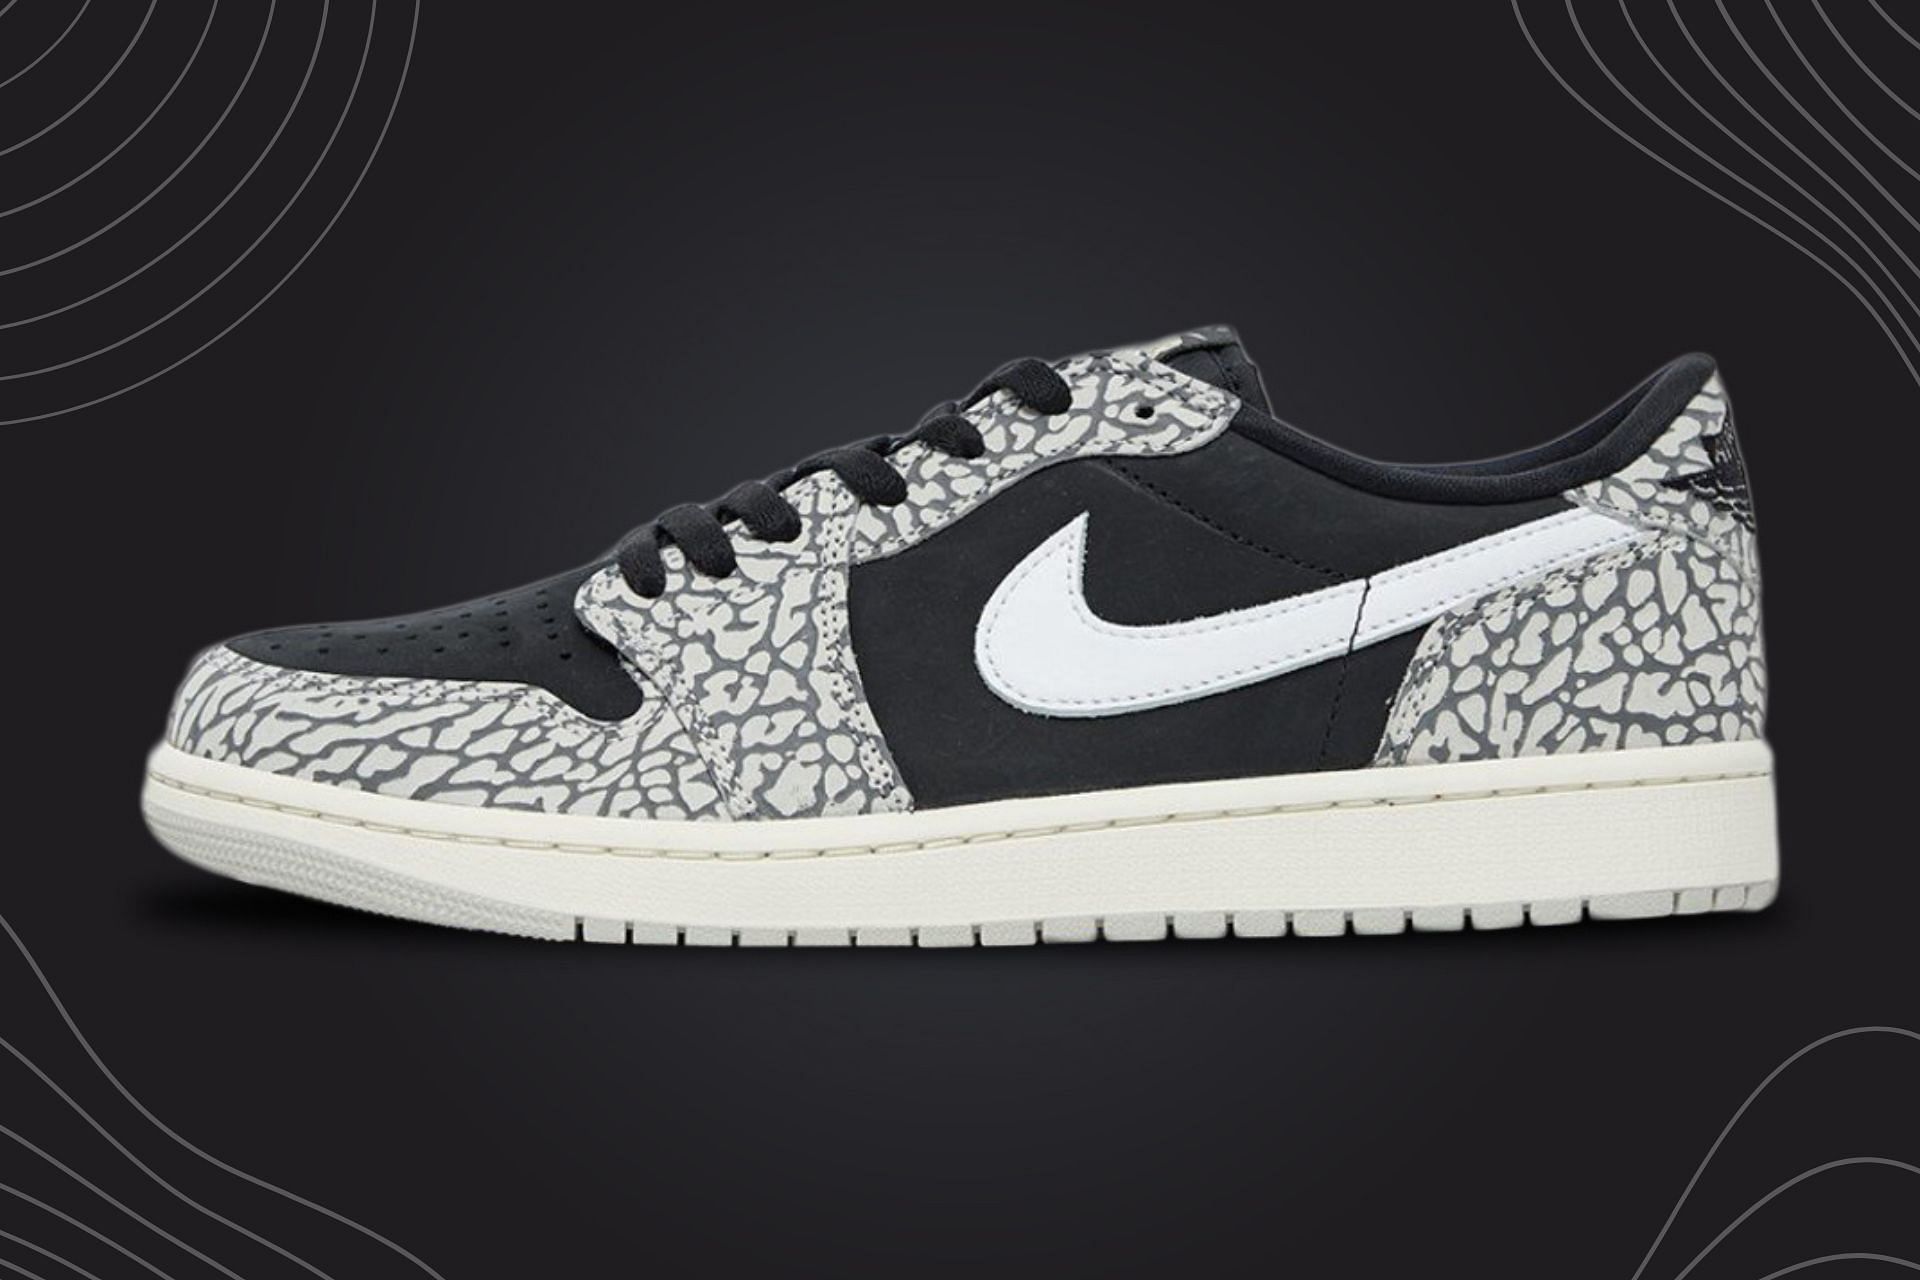 Nike Air Jordan 1 Low Black Elephant shoes (Image via Offspring)